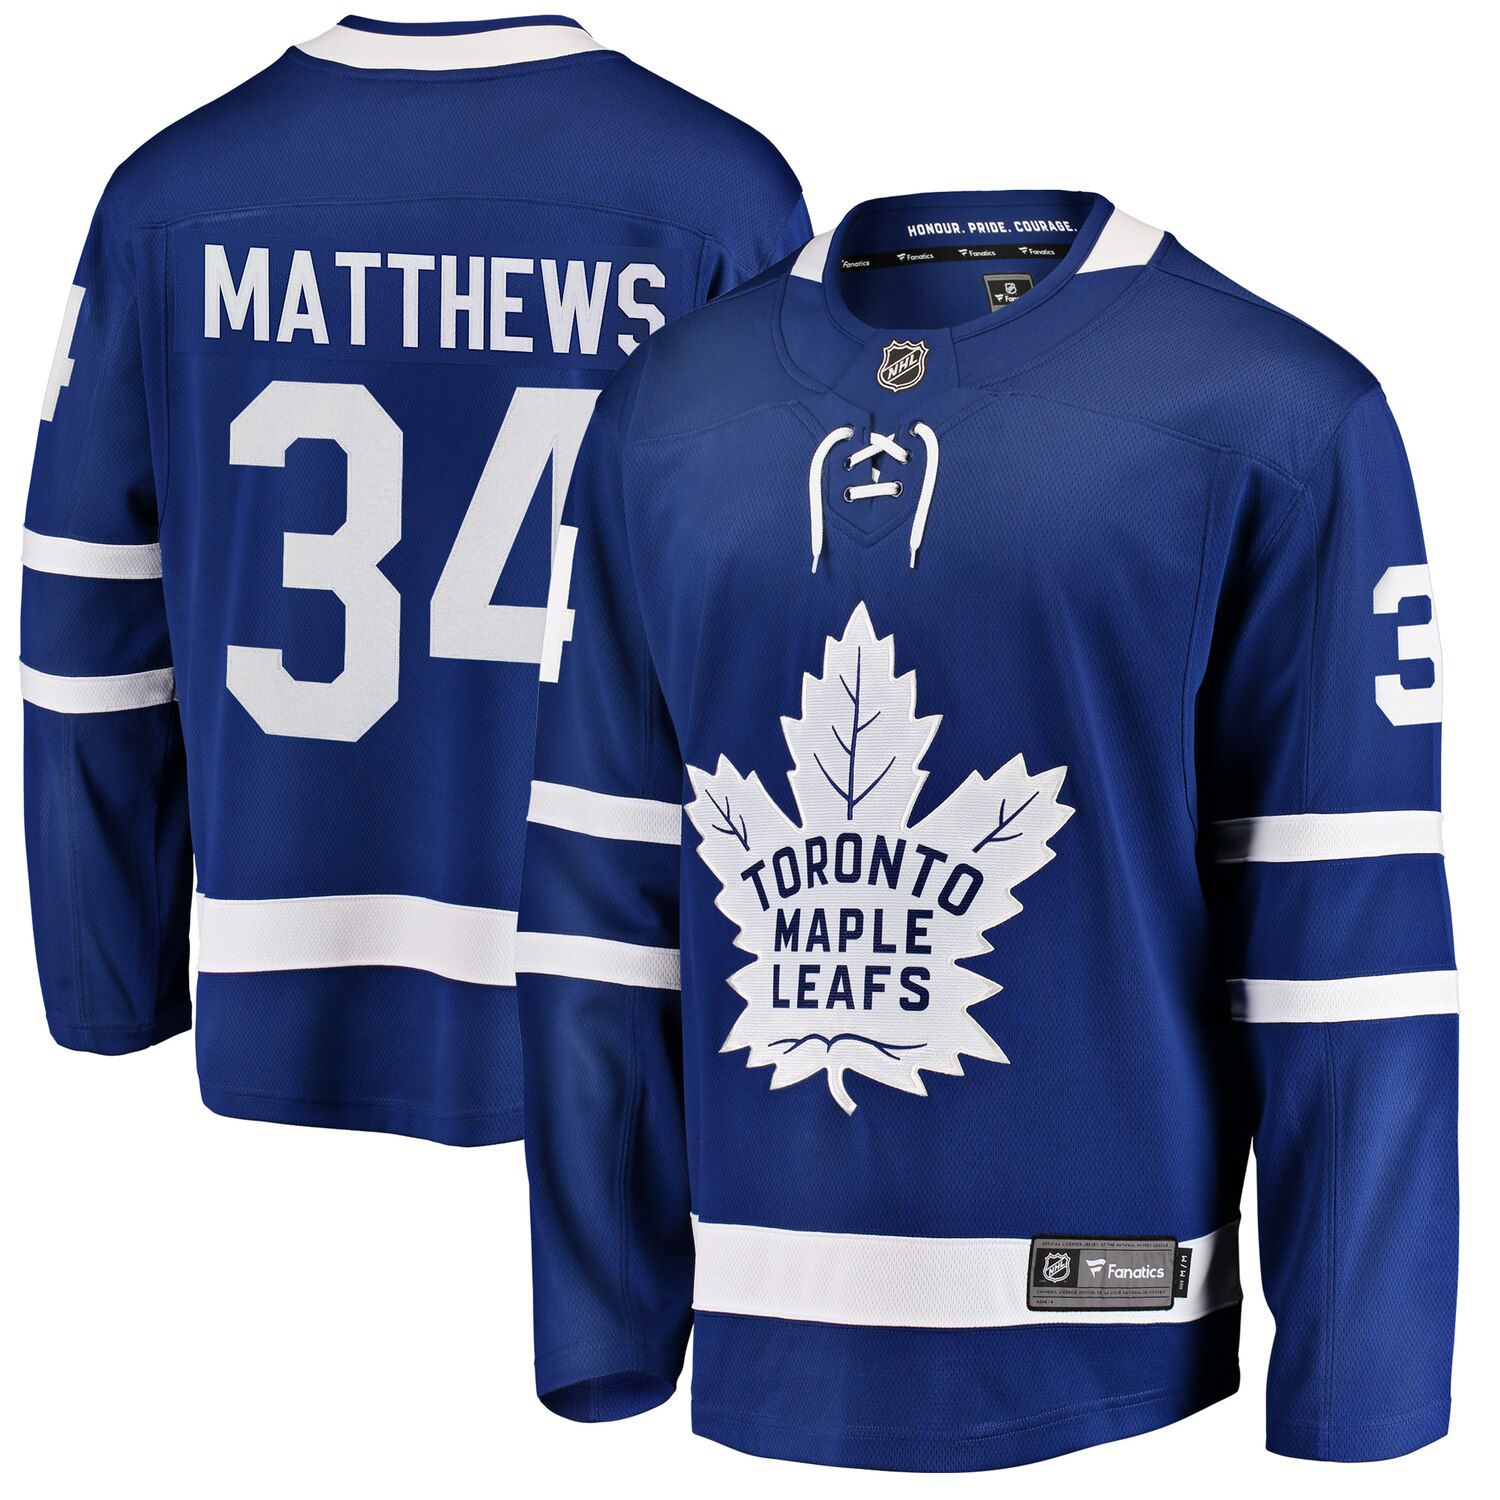 Мужская фирменная футболка игрока Auston Matthews Royal Toronto Maple Leafs Fanatics